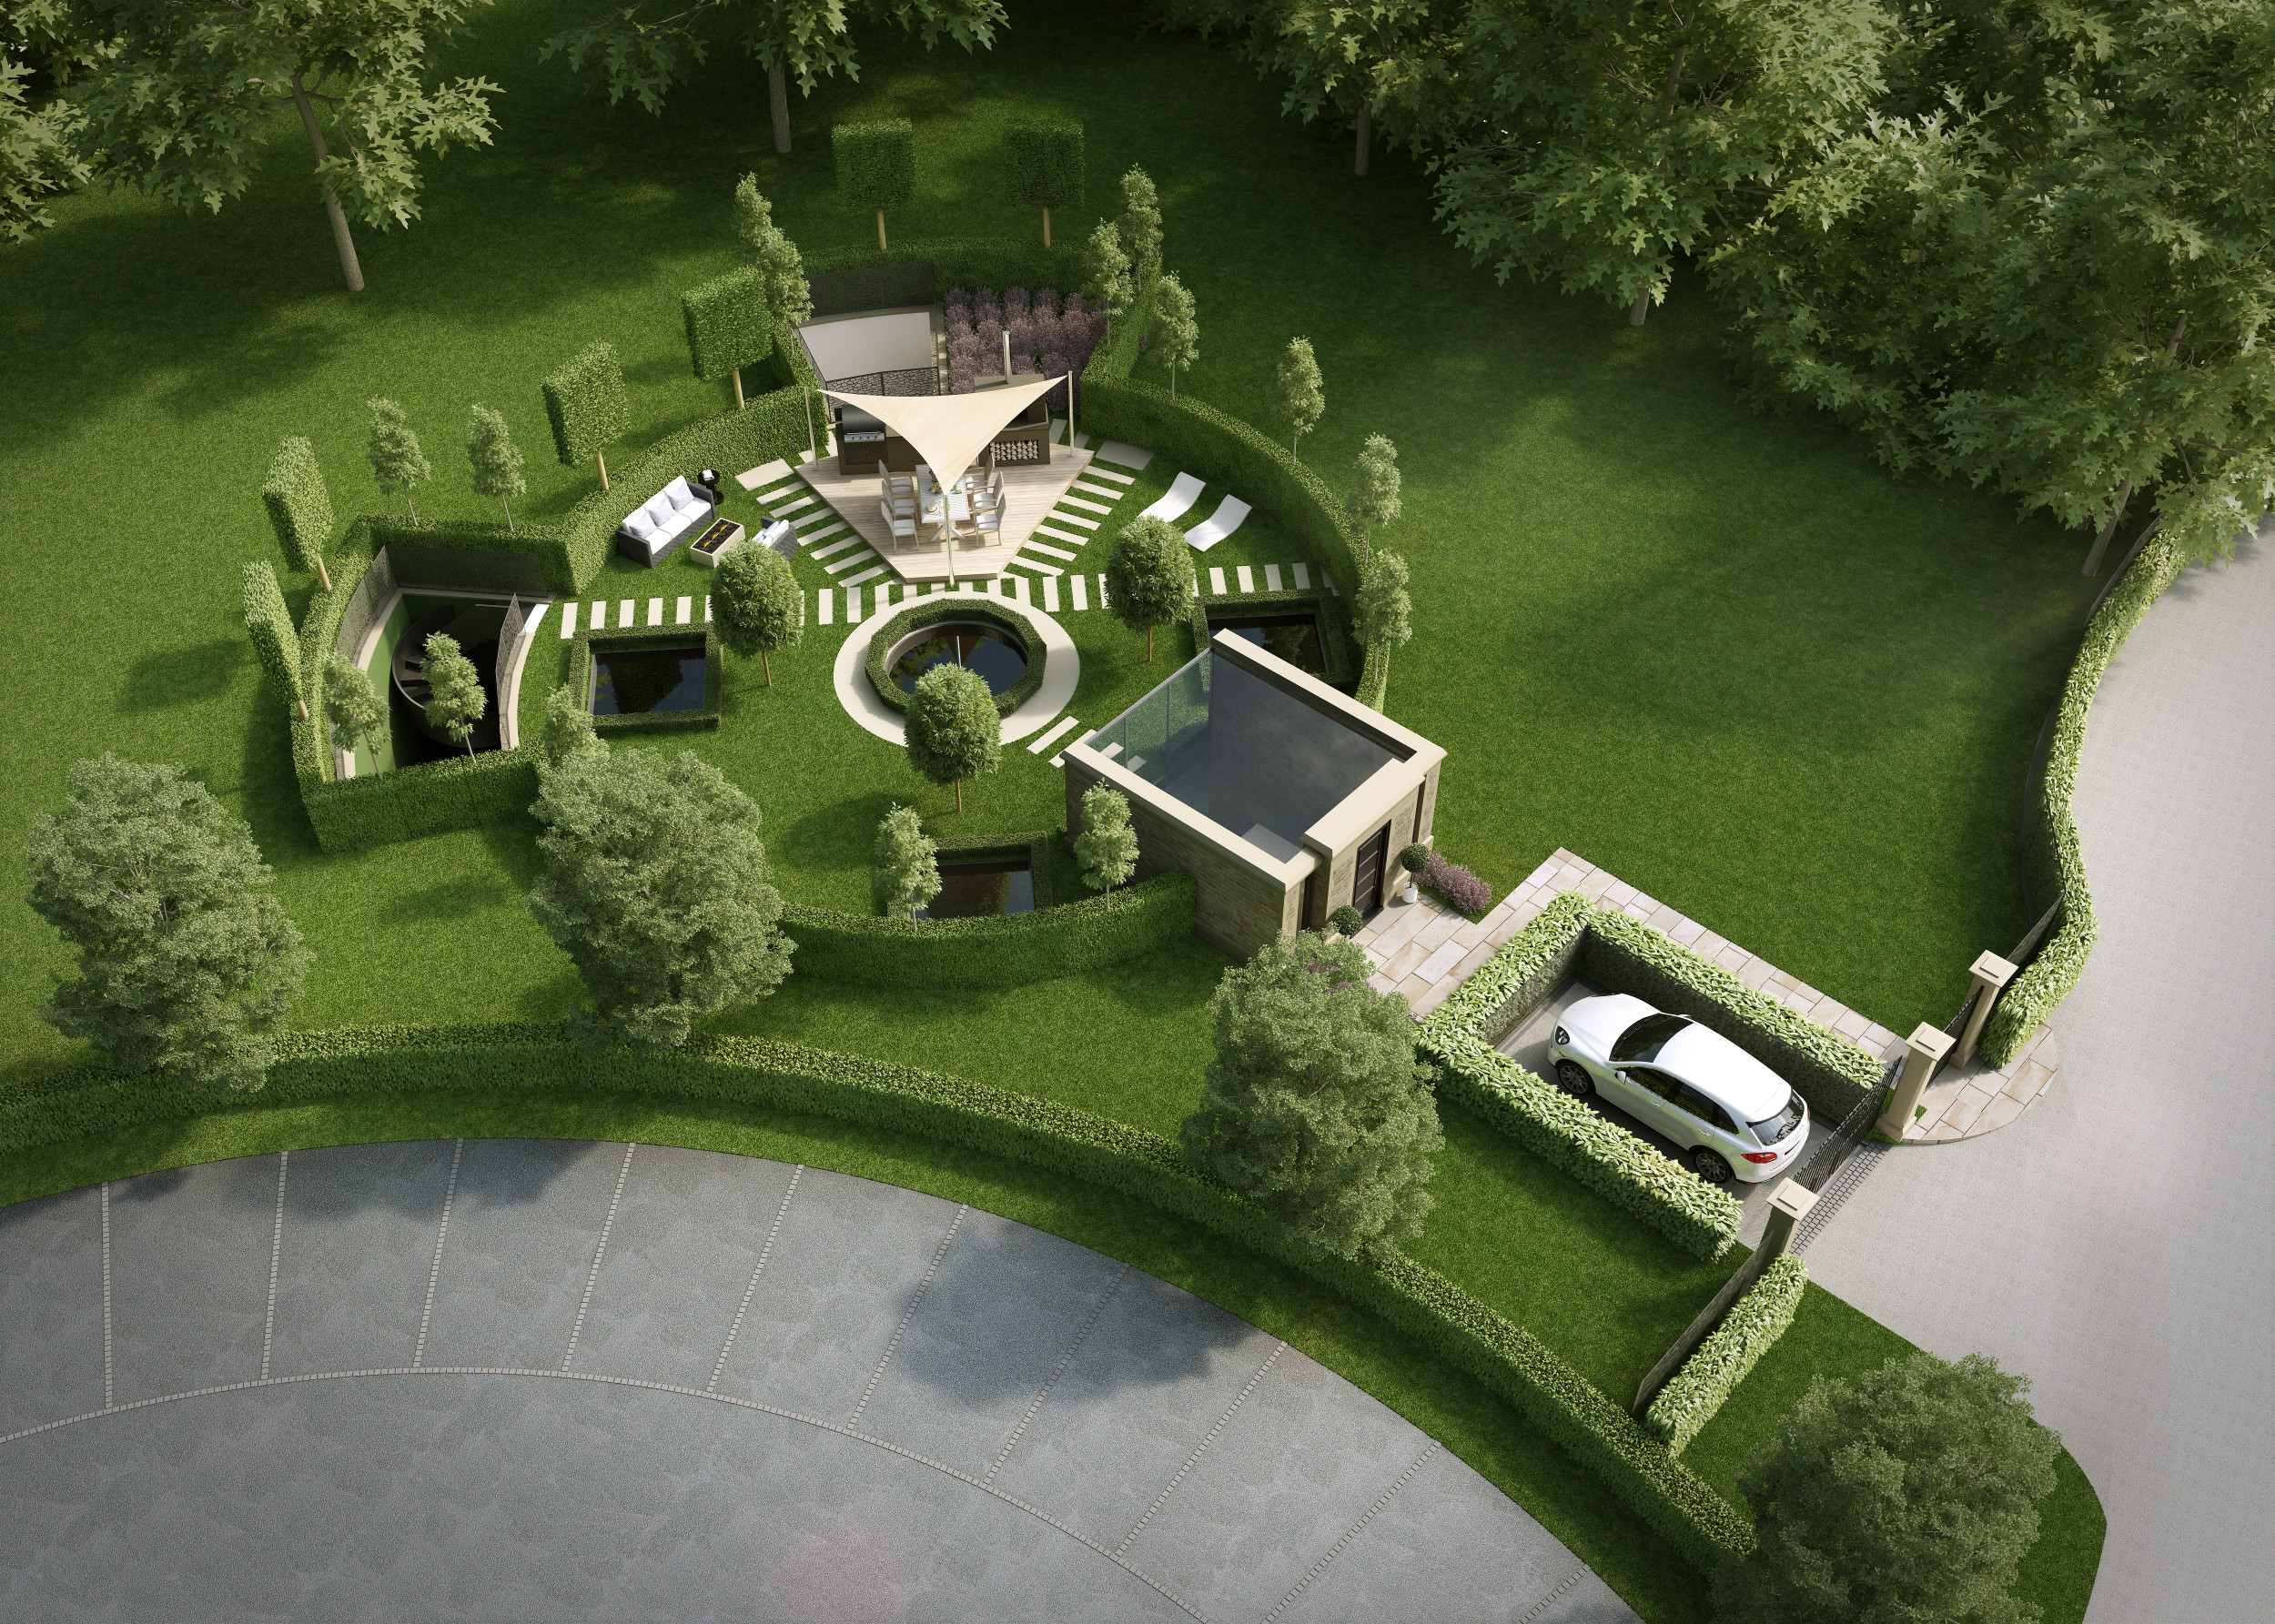 ‘I Built a 4,000 sq ft Circular Underground Luxury Home’